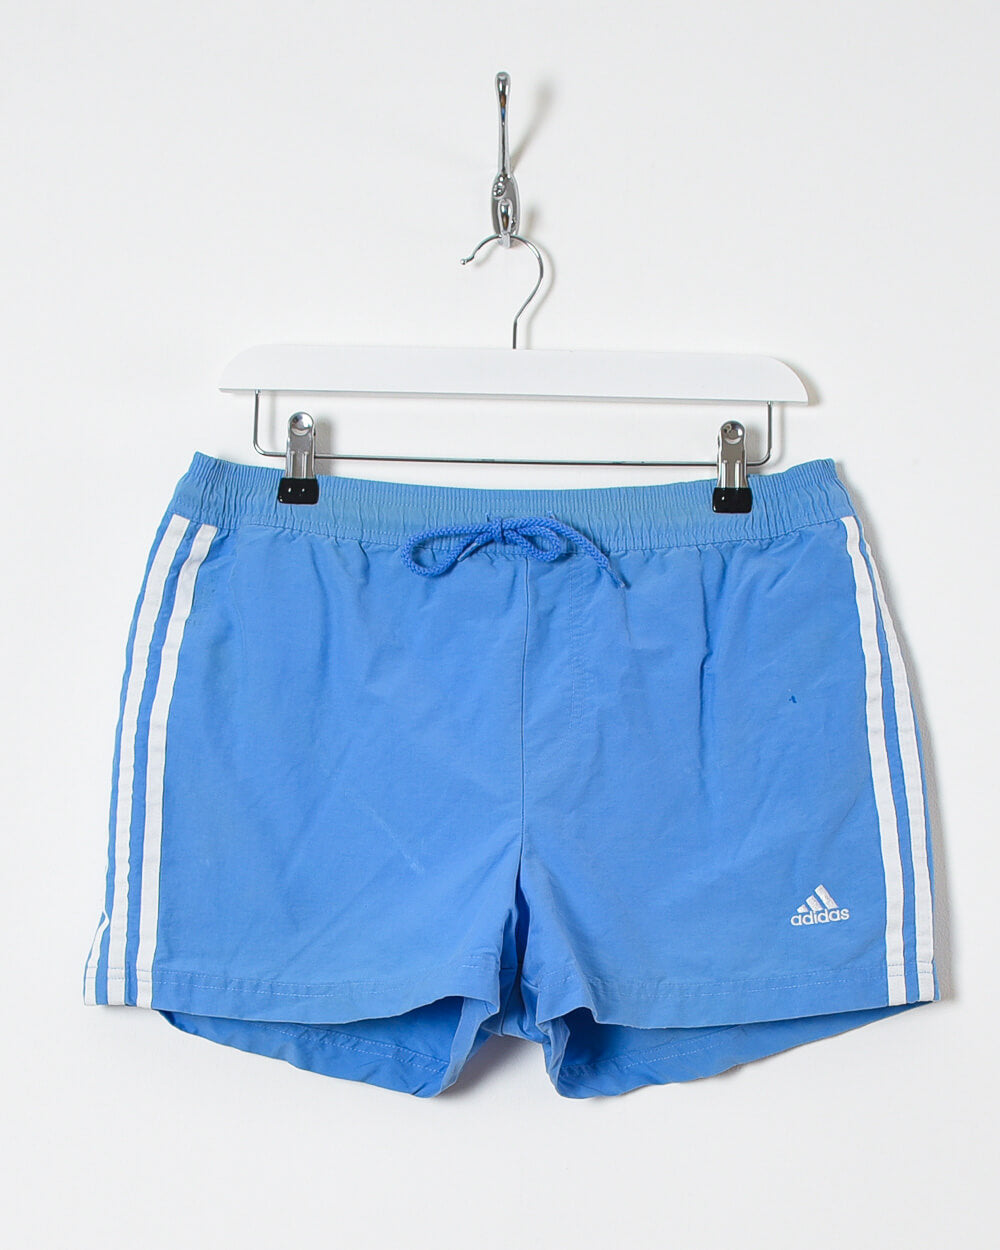 Adidas Swimwear Shorts - W30 - Domno Vintage 90s, 80s, 00s Retro and Vintage Clothing 